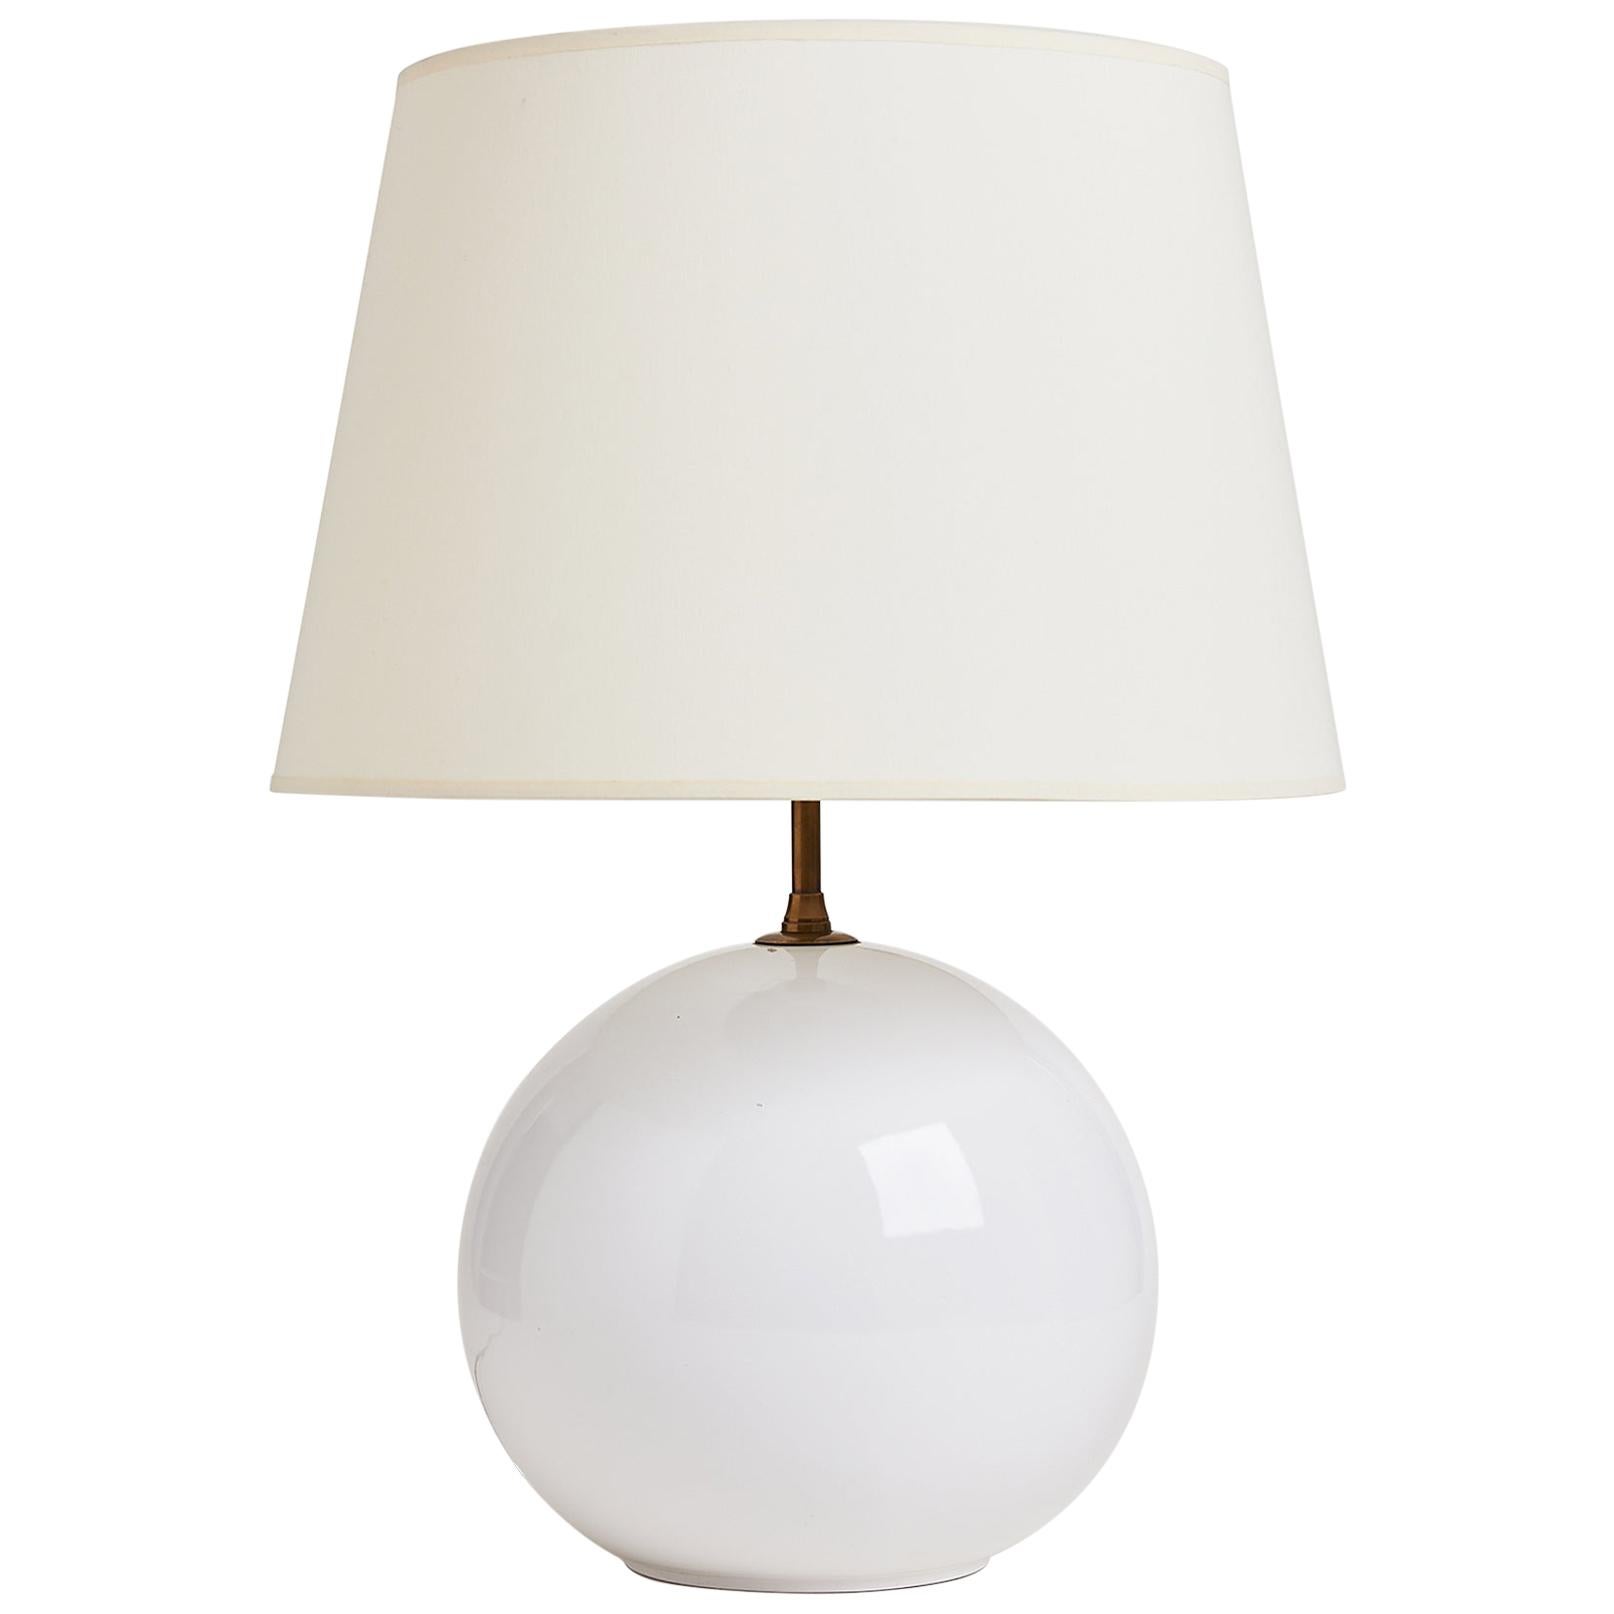 Midcentury White Ceramic Ball Table Lamp